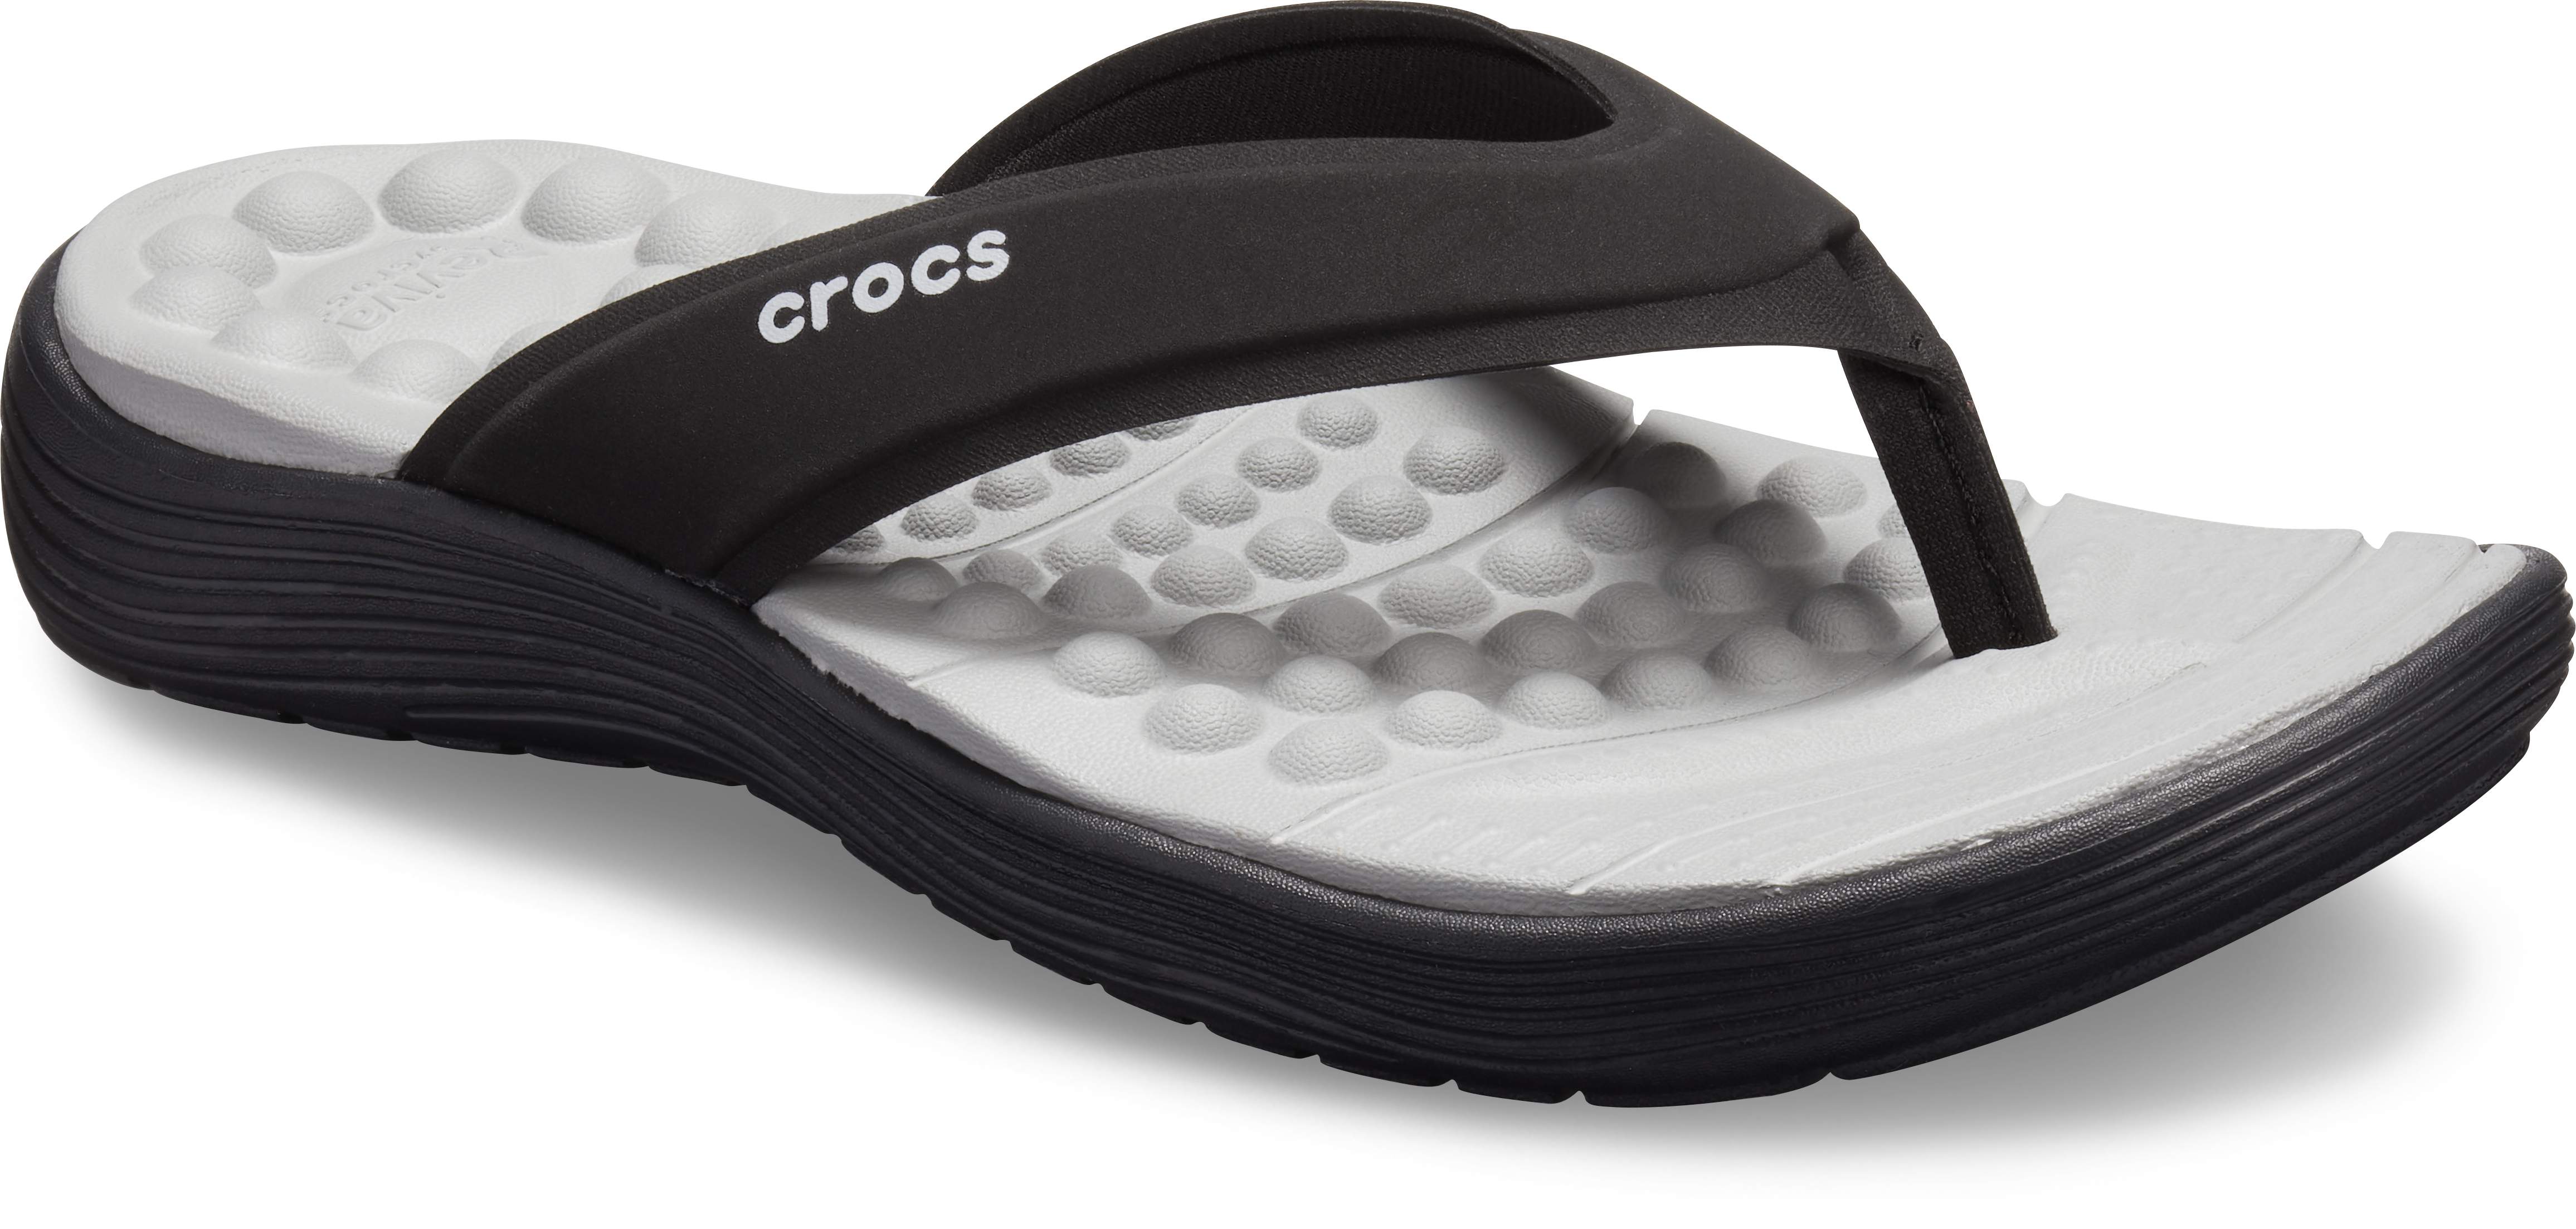 Women's Crocs Reviva™ Flip - Crocs